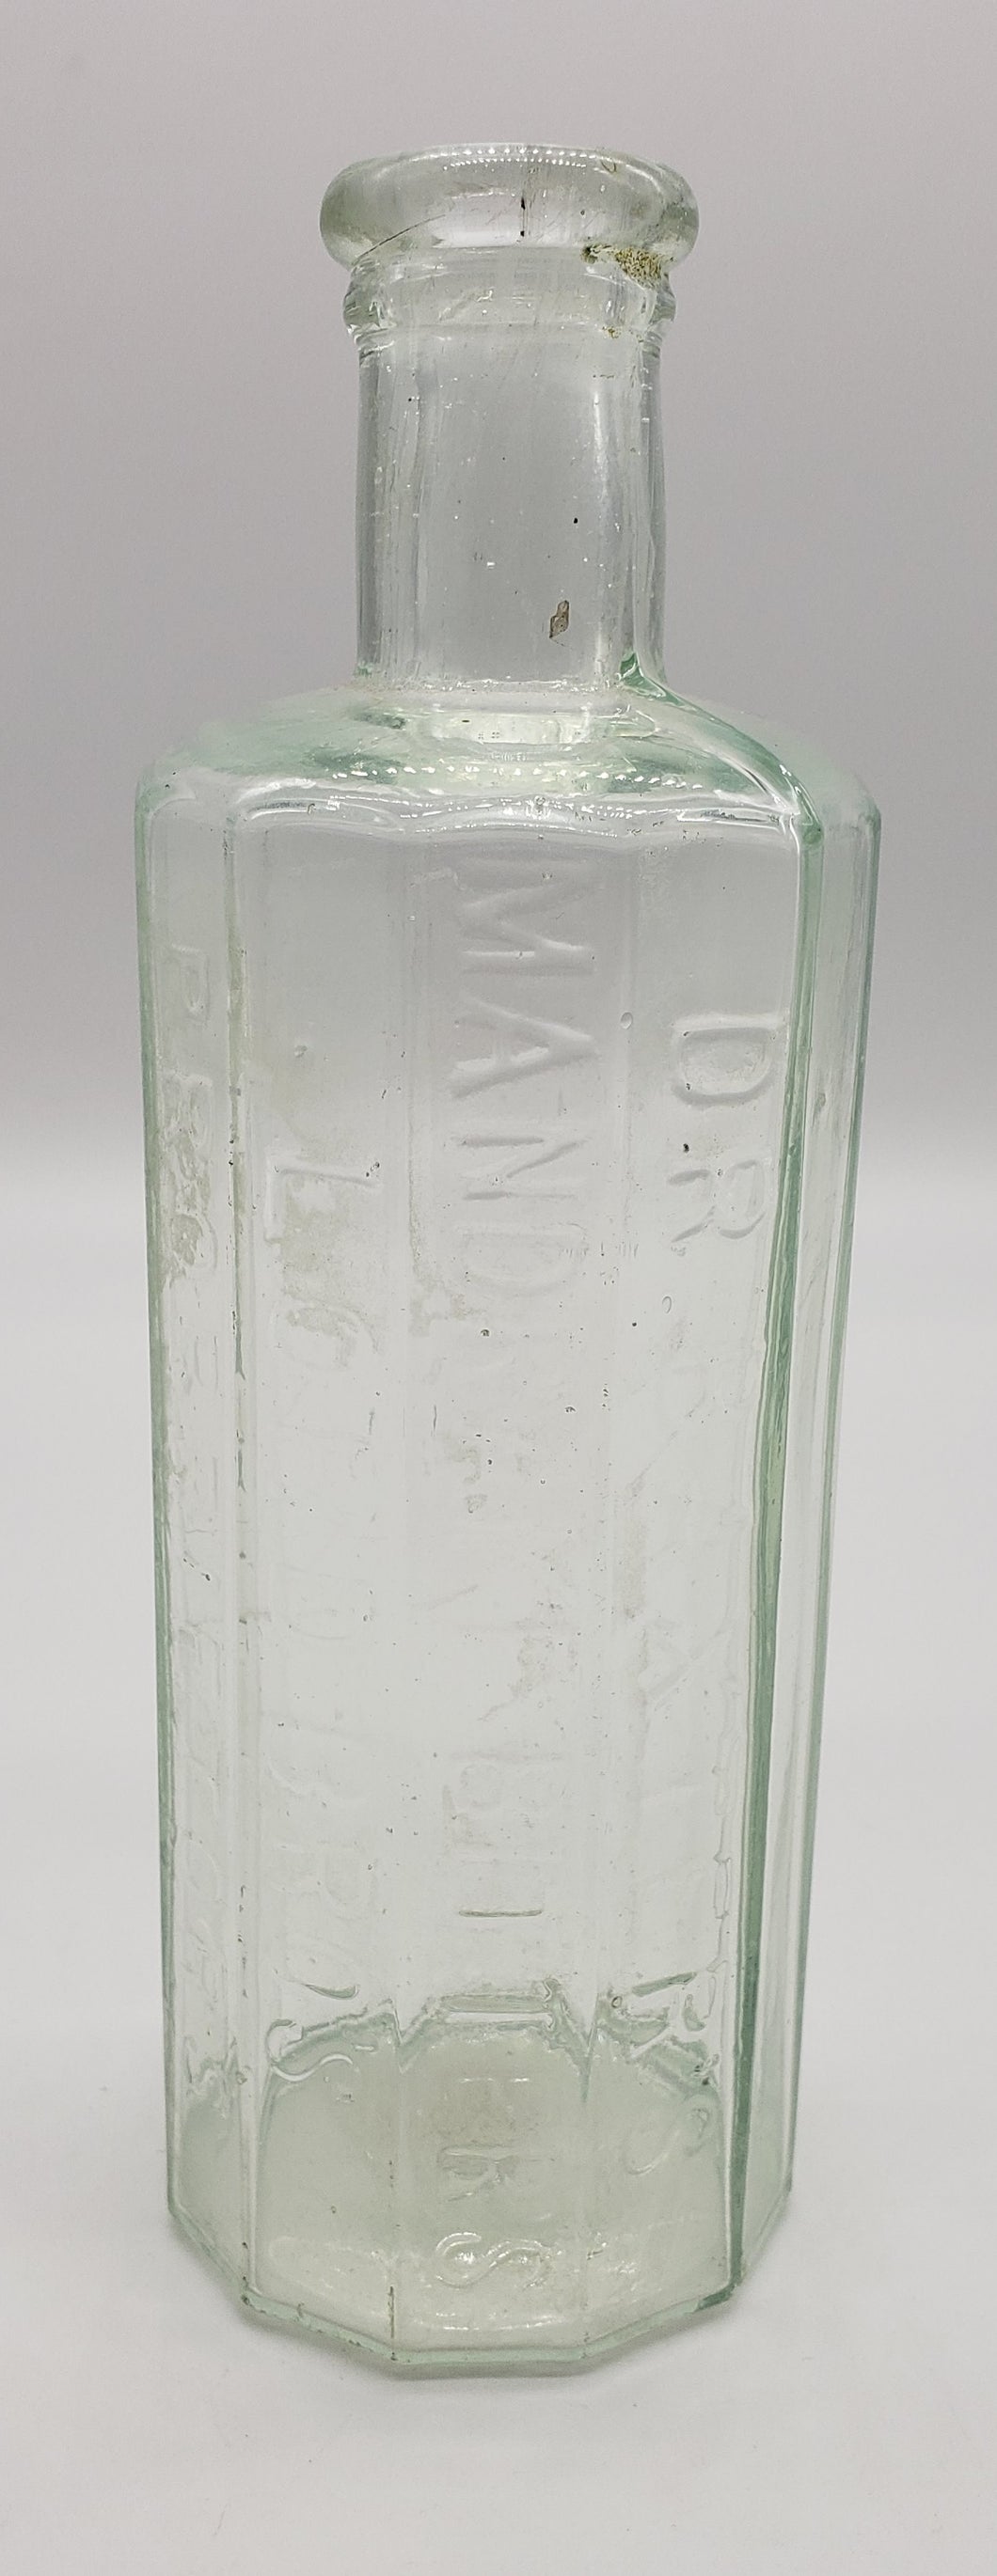 Dr. Baxter's Mandrake Bitters Lord Bros. Glass bottle